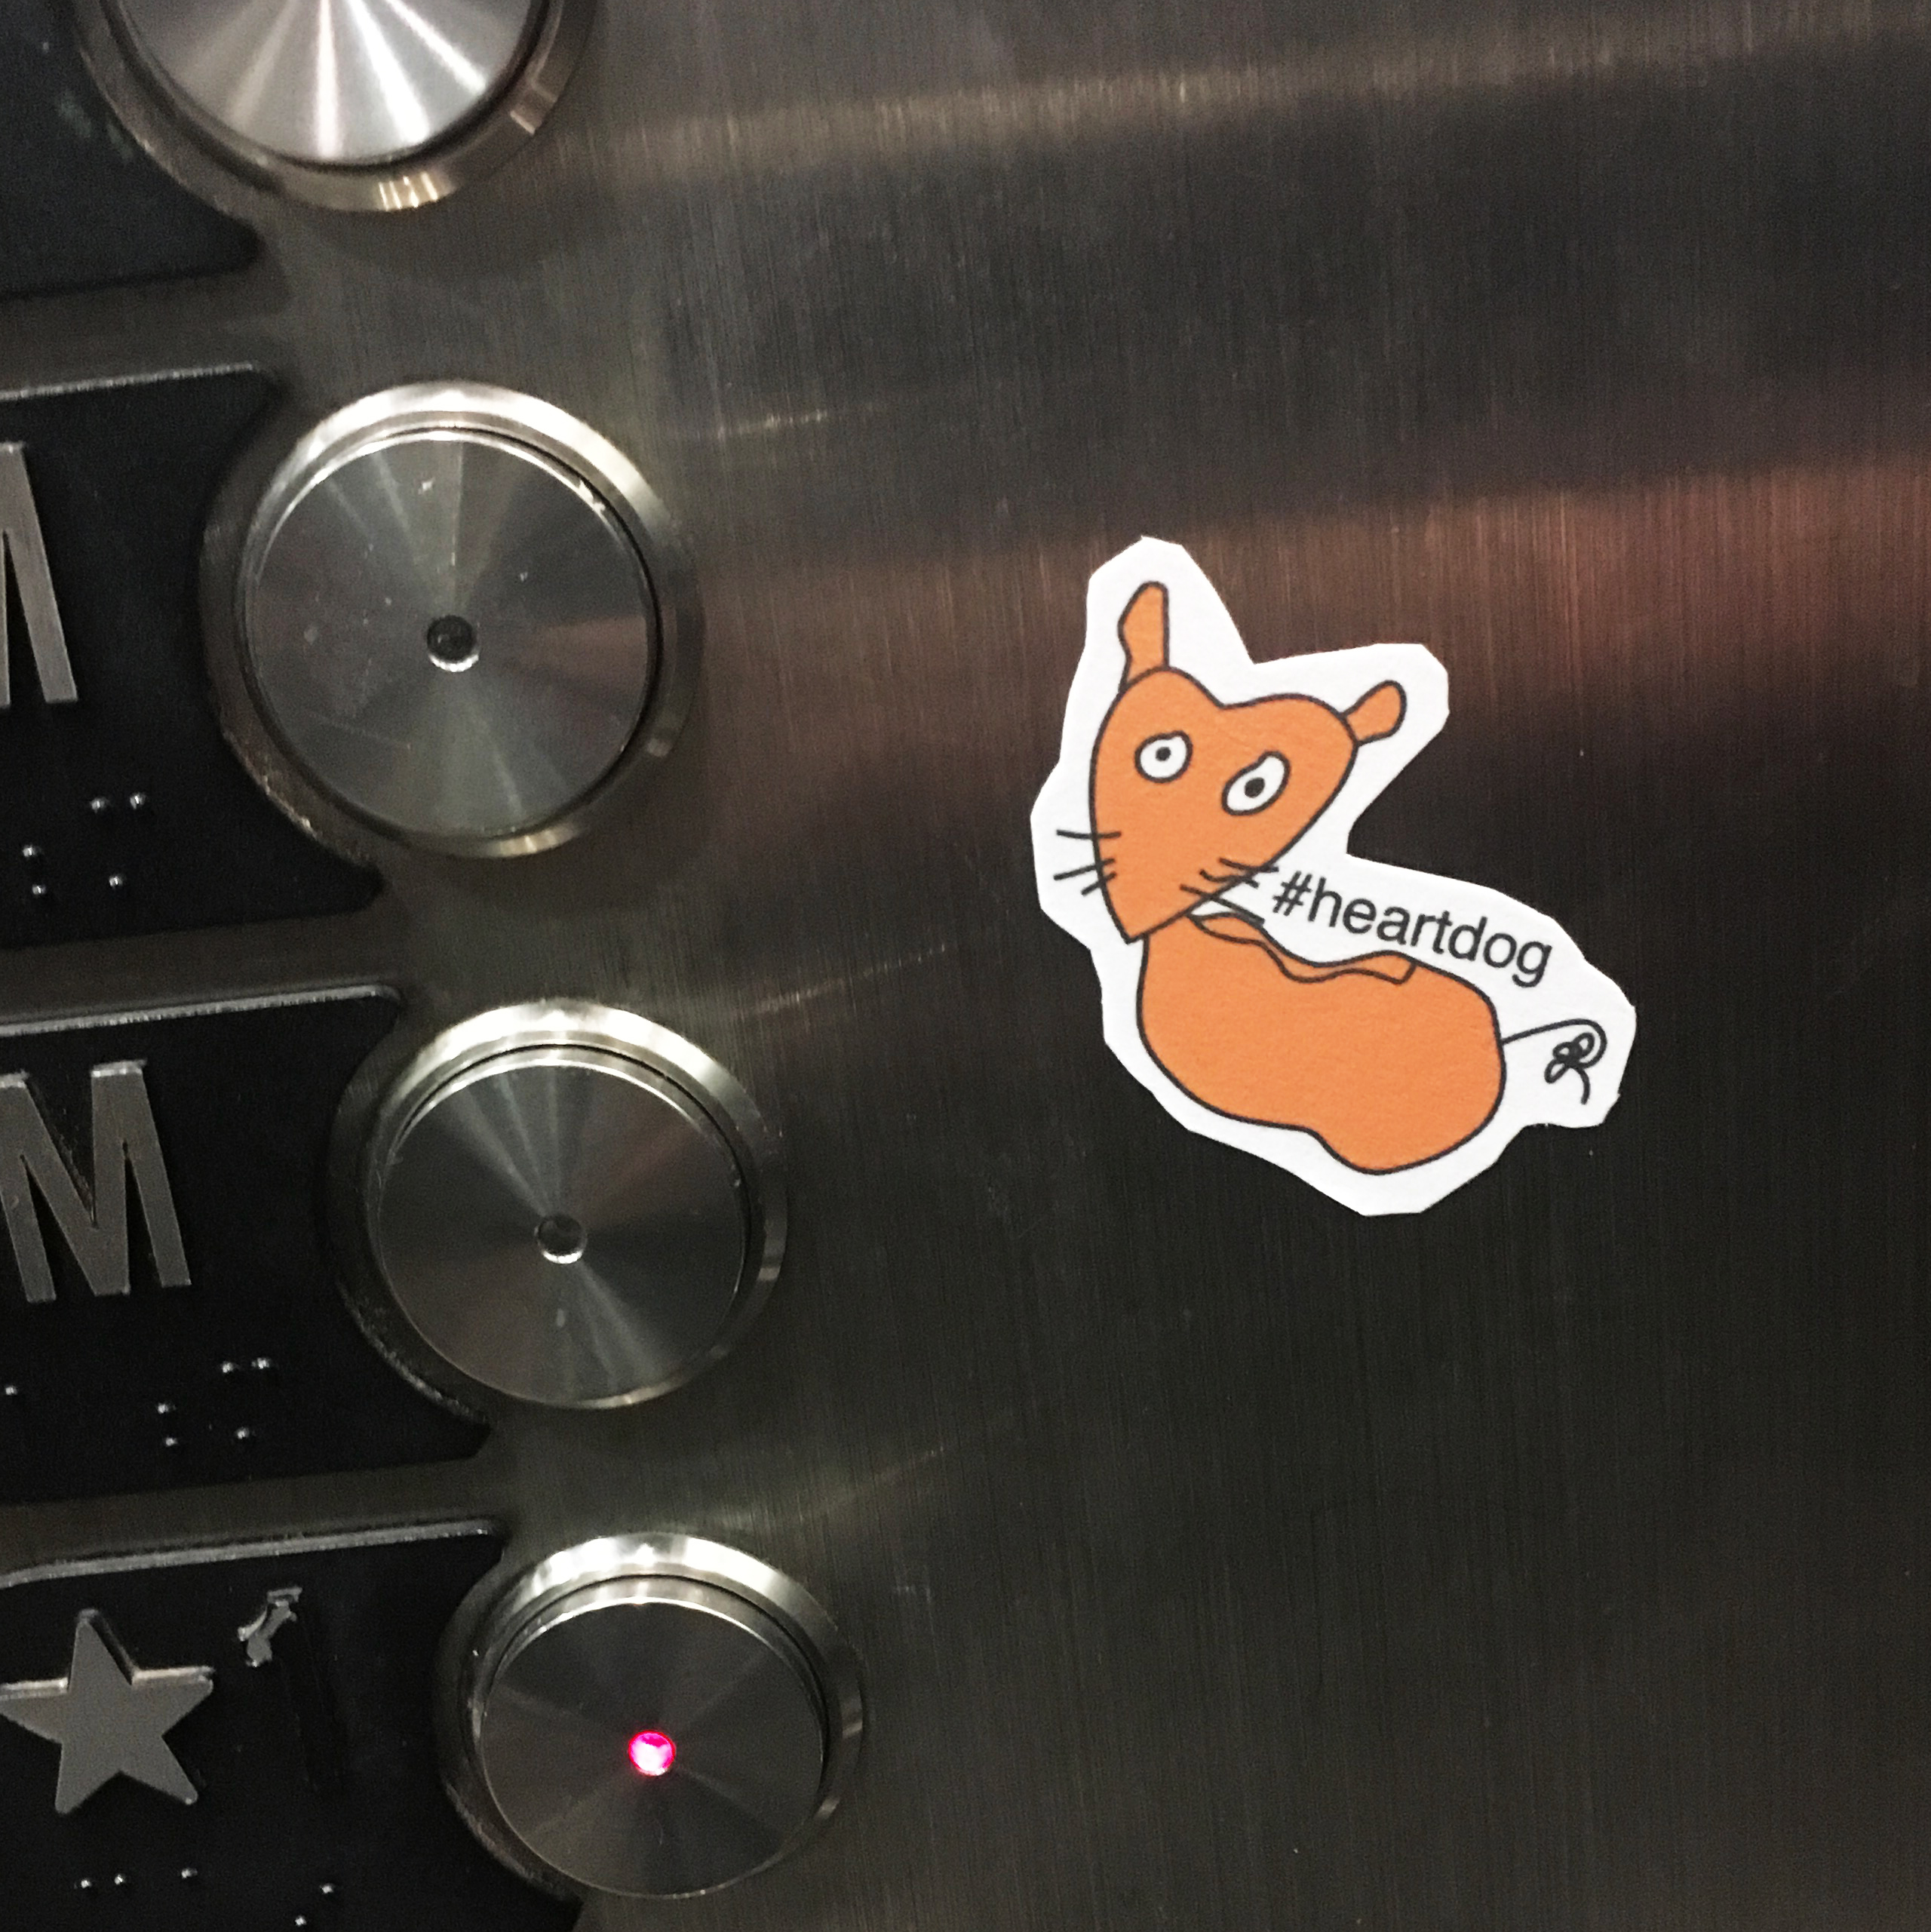 heartdog on elevator